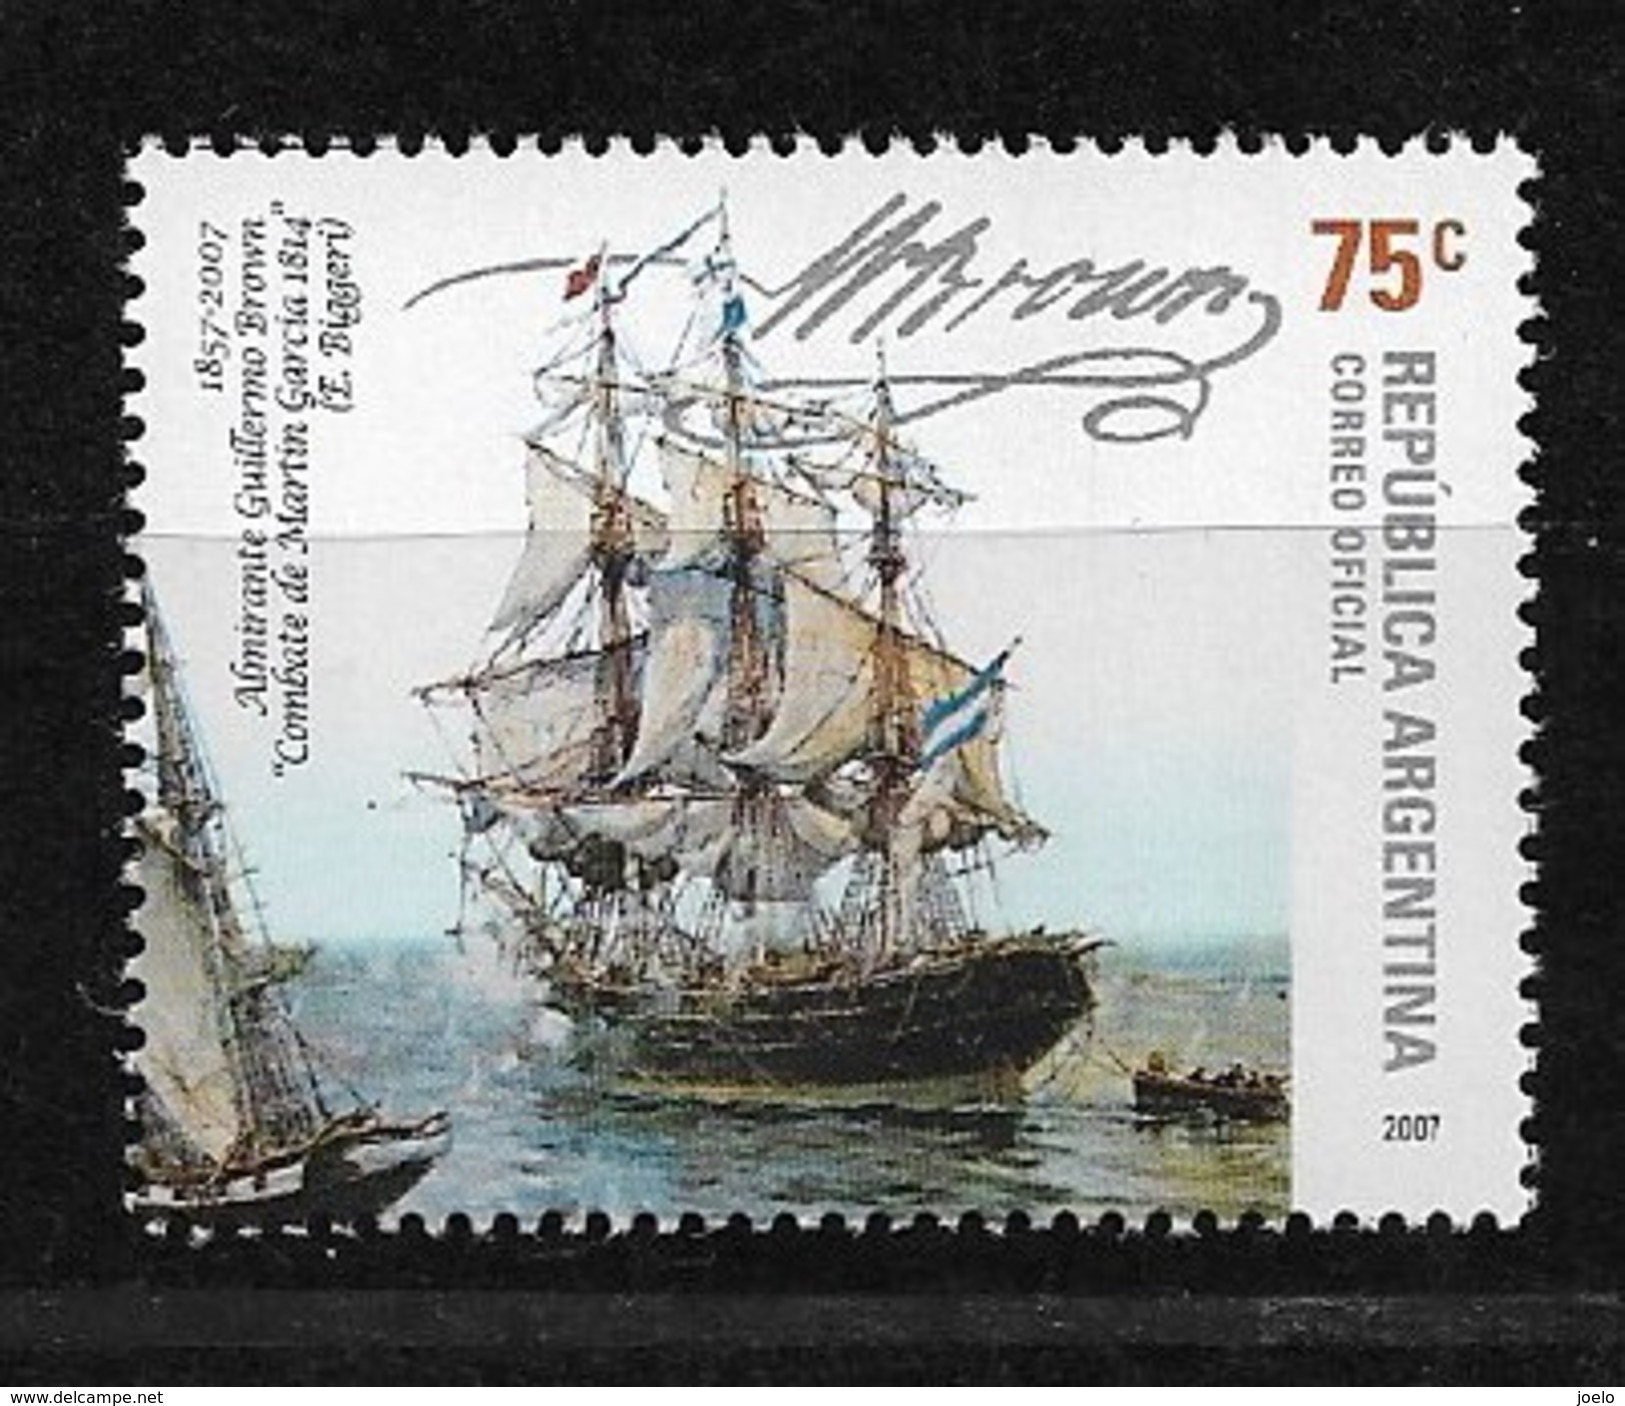 ARGENTINA 2007 GALLEON HERCULES MNH - Unused Stamps